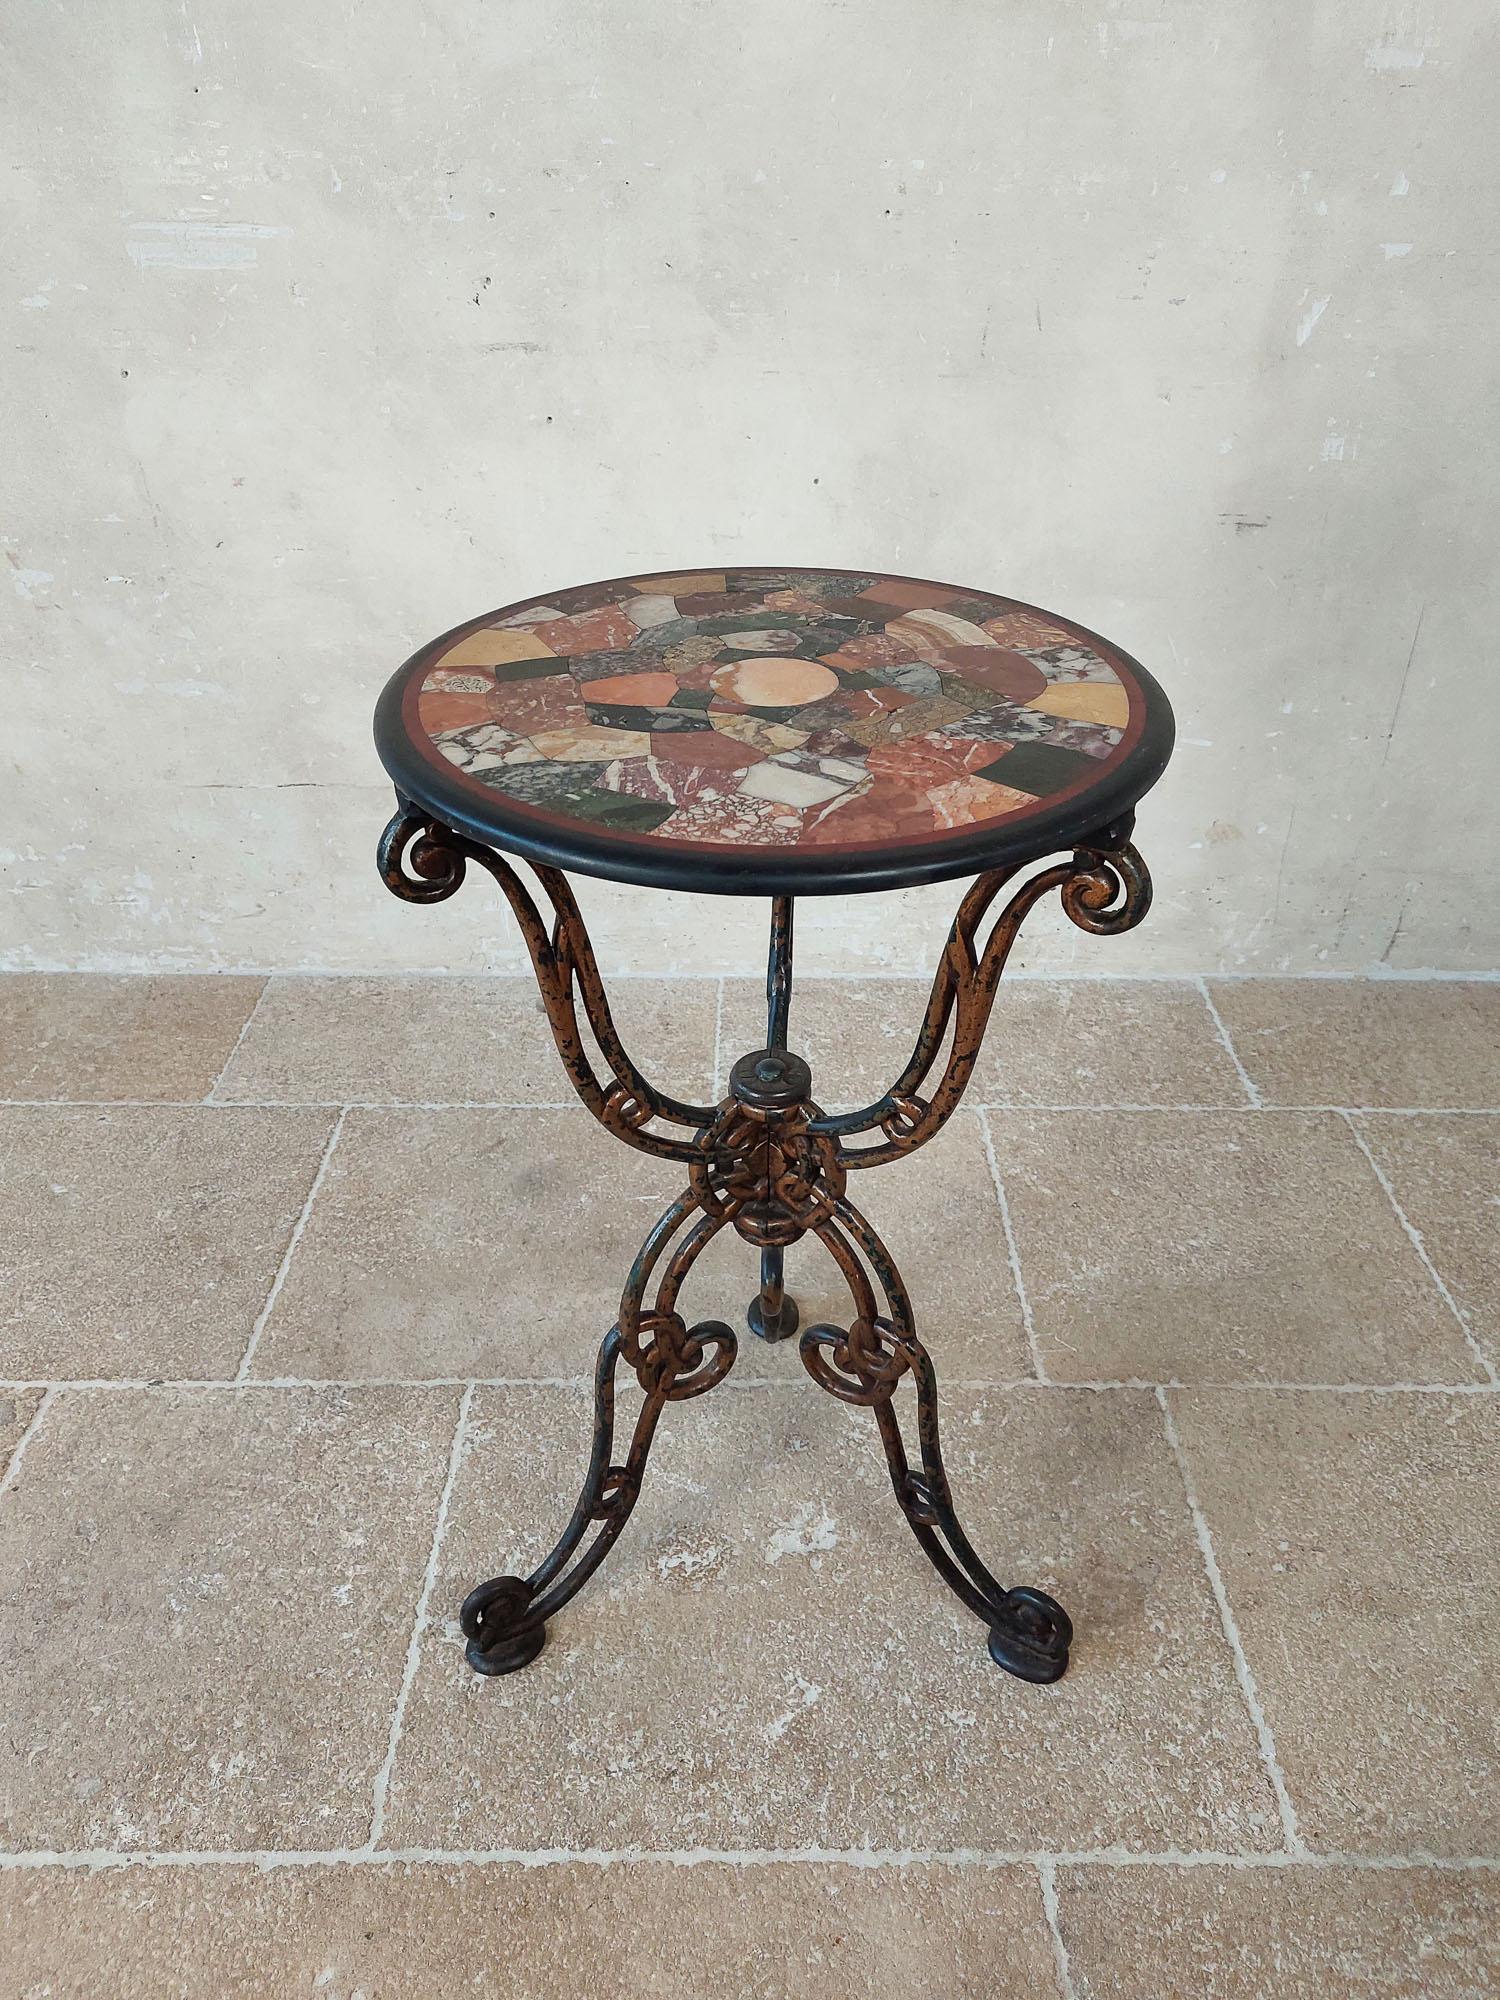 Fer Table de bistro ronde en fonte avec mosaïque de marbre incrusté (intarsia) en vente